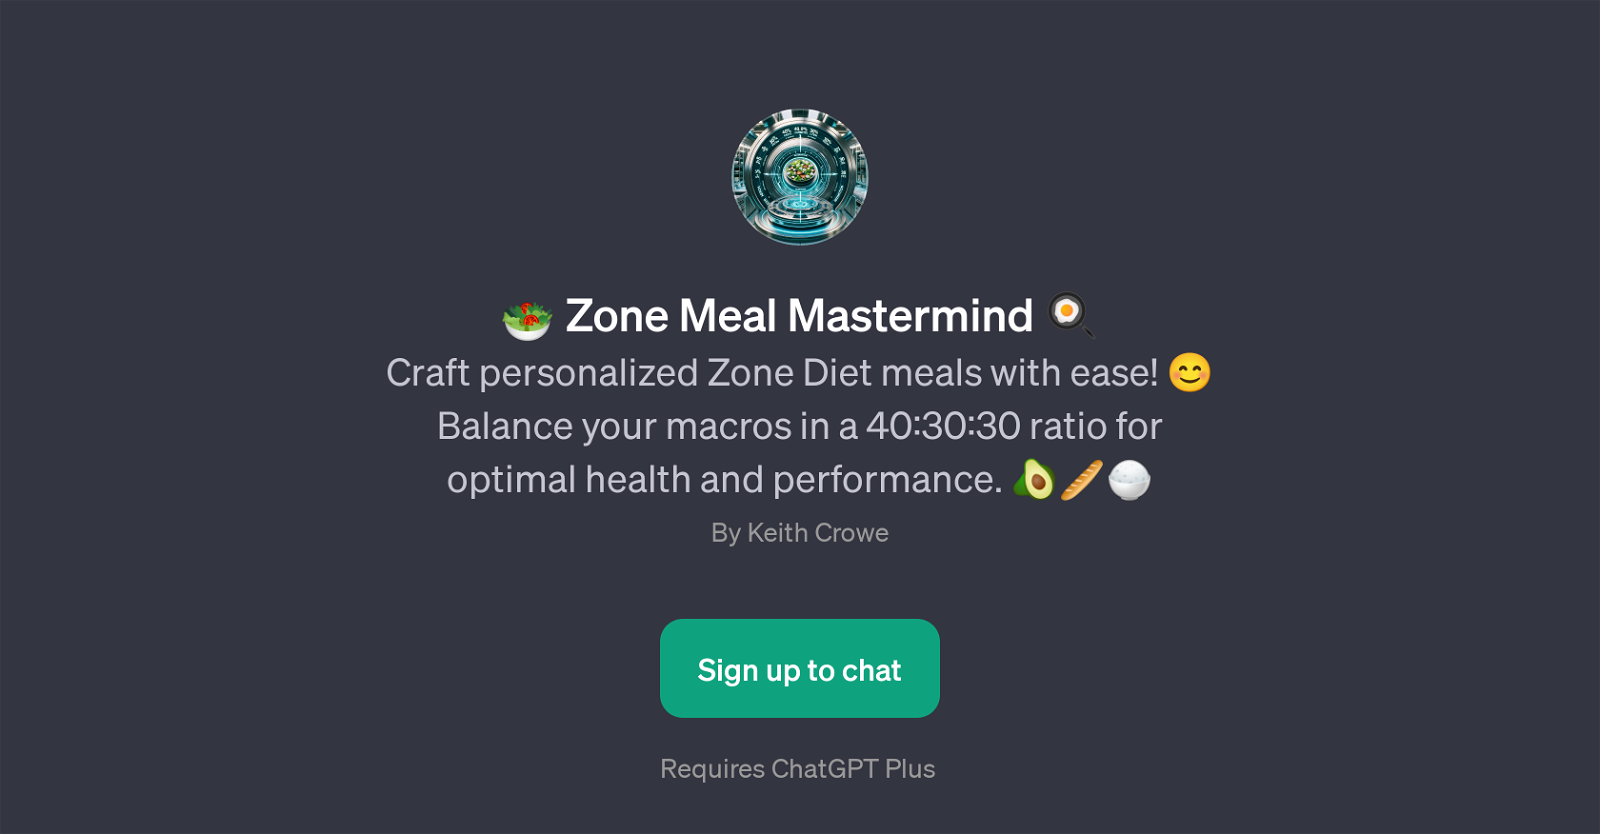 Zone Meal Mastermind website